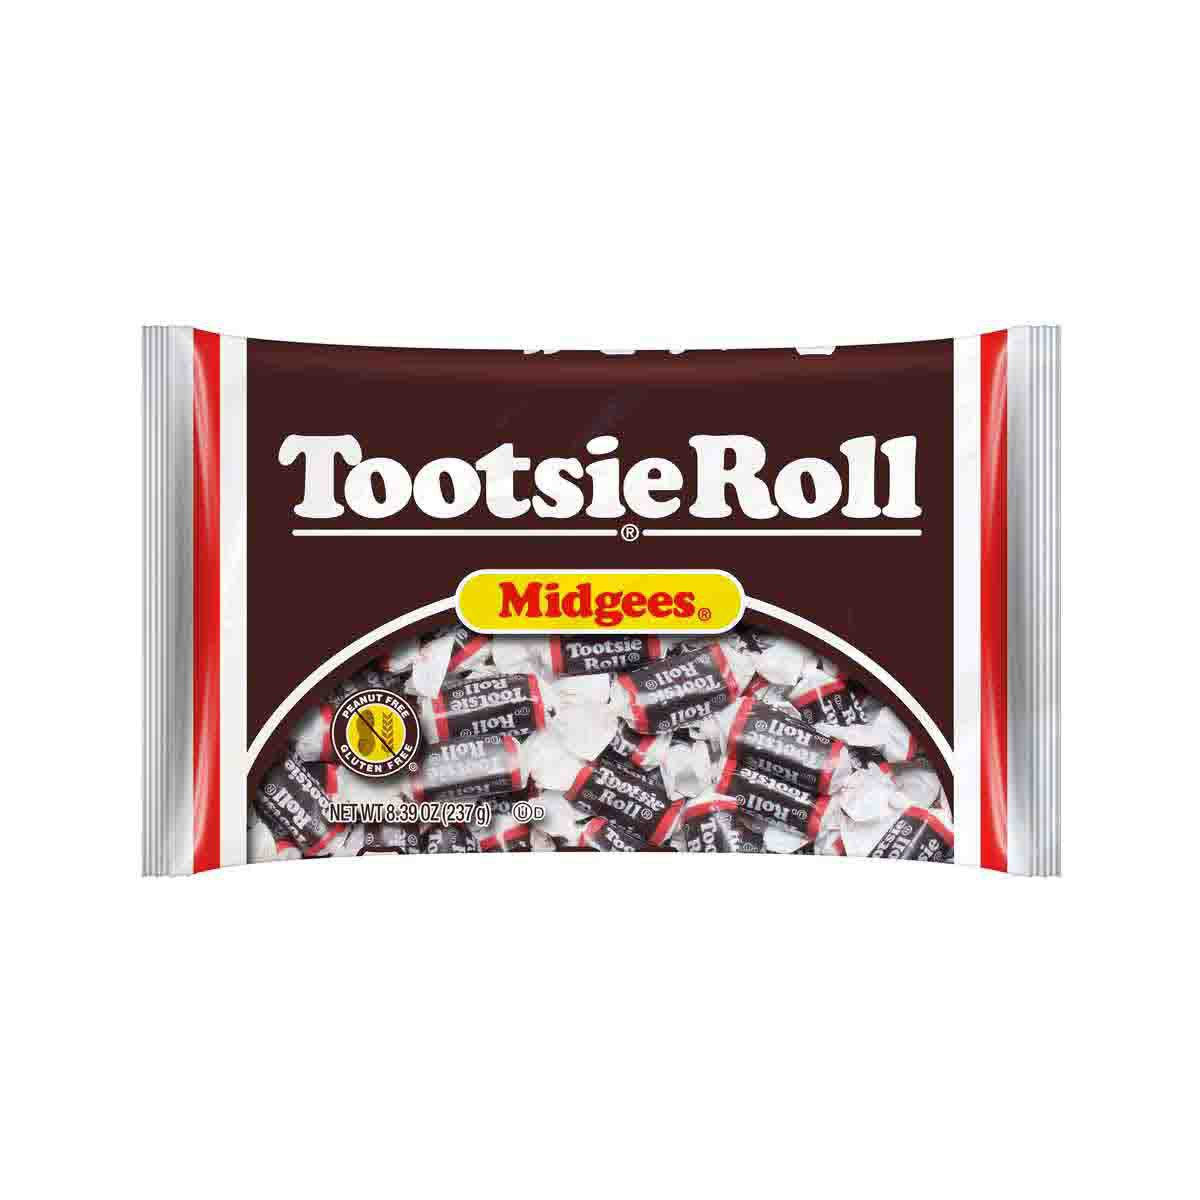 Tootsie Roll Midgees Chocolate Candy, 8.39 oz.